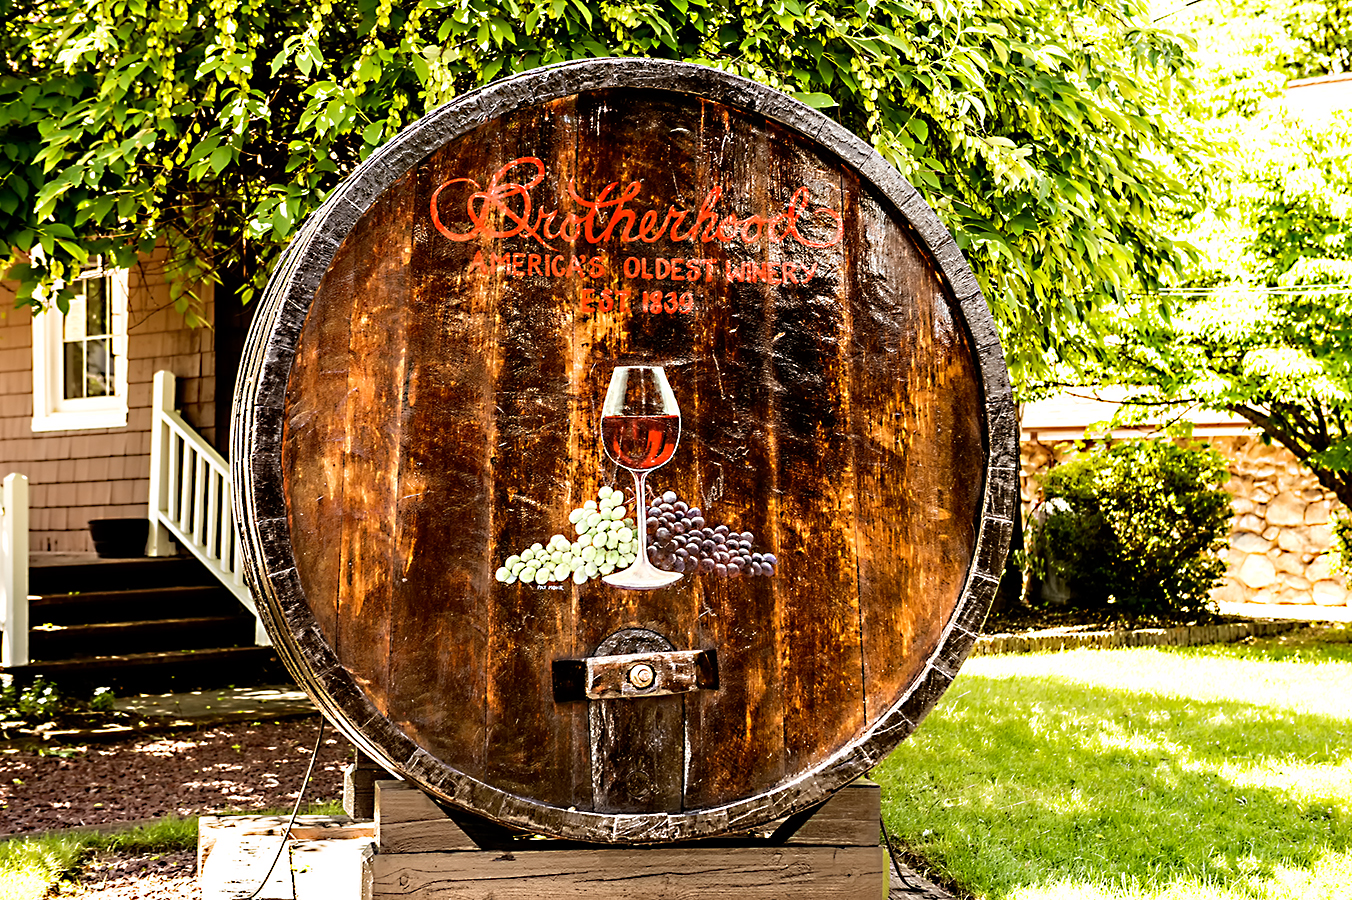 1506_1503a.jpg - July -- Brotherhood Winery (America's Oldest)